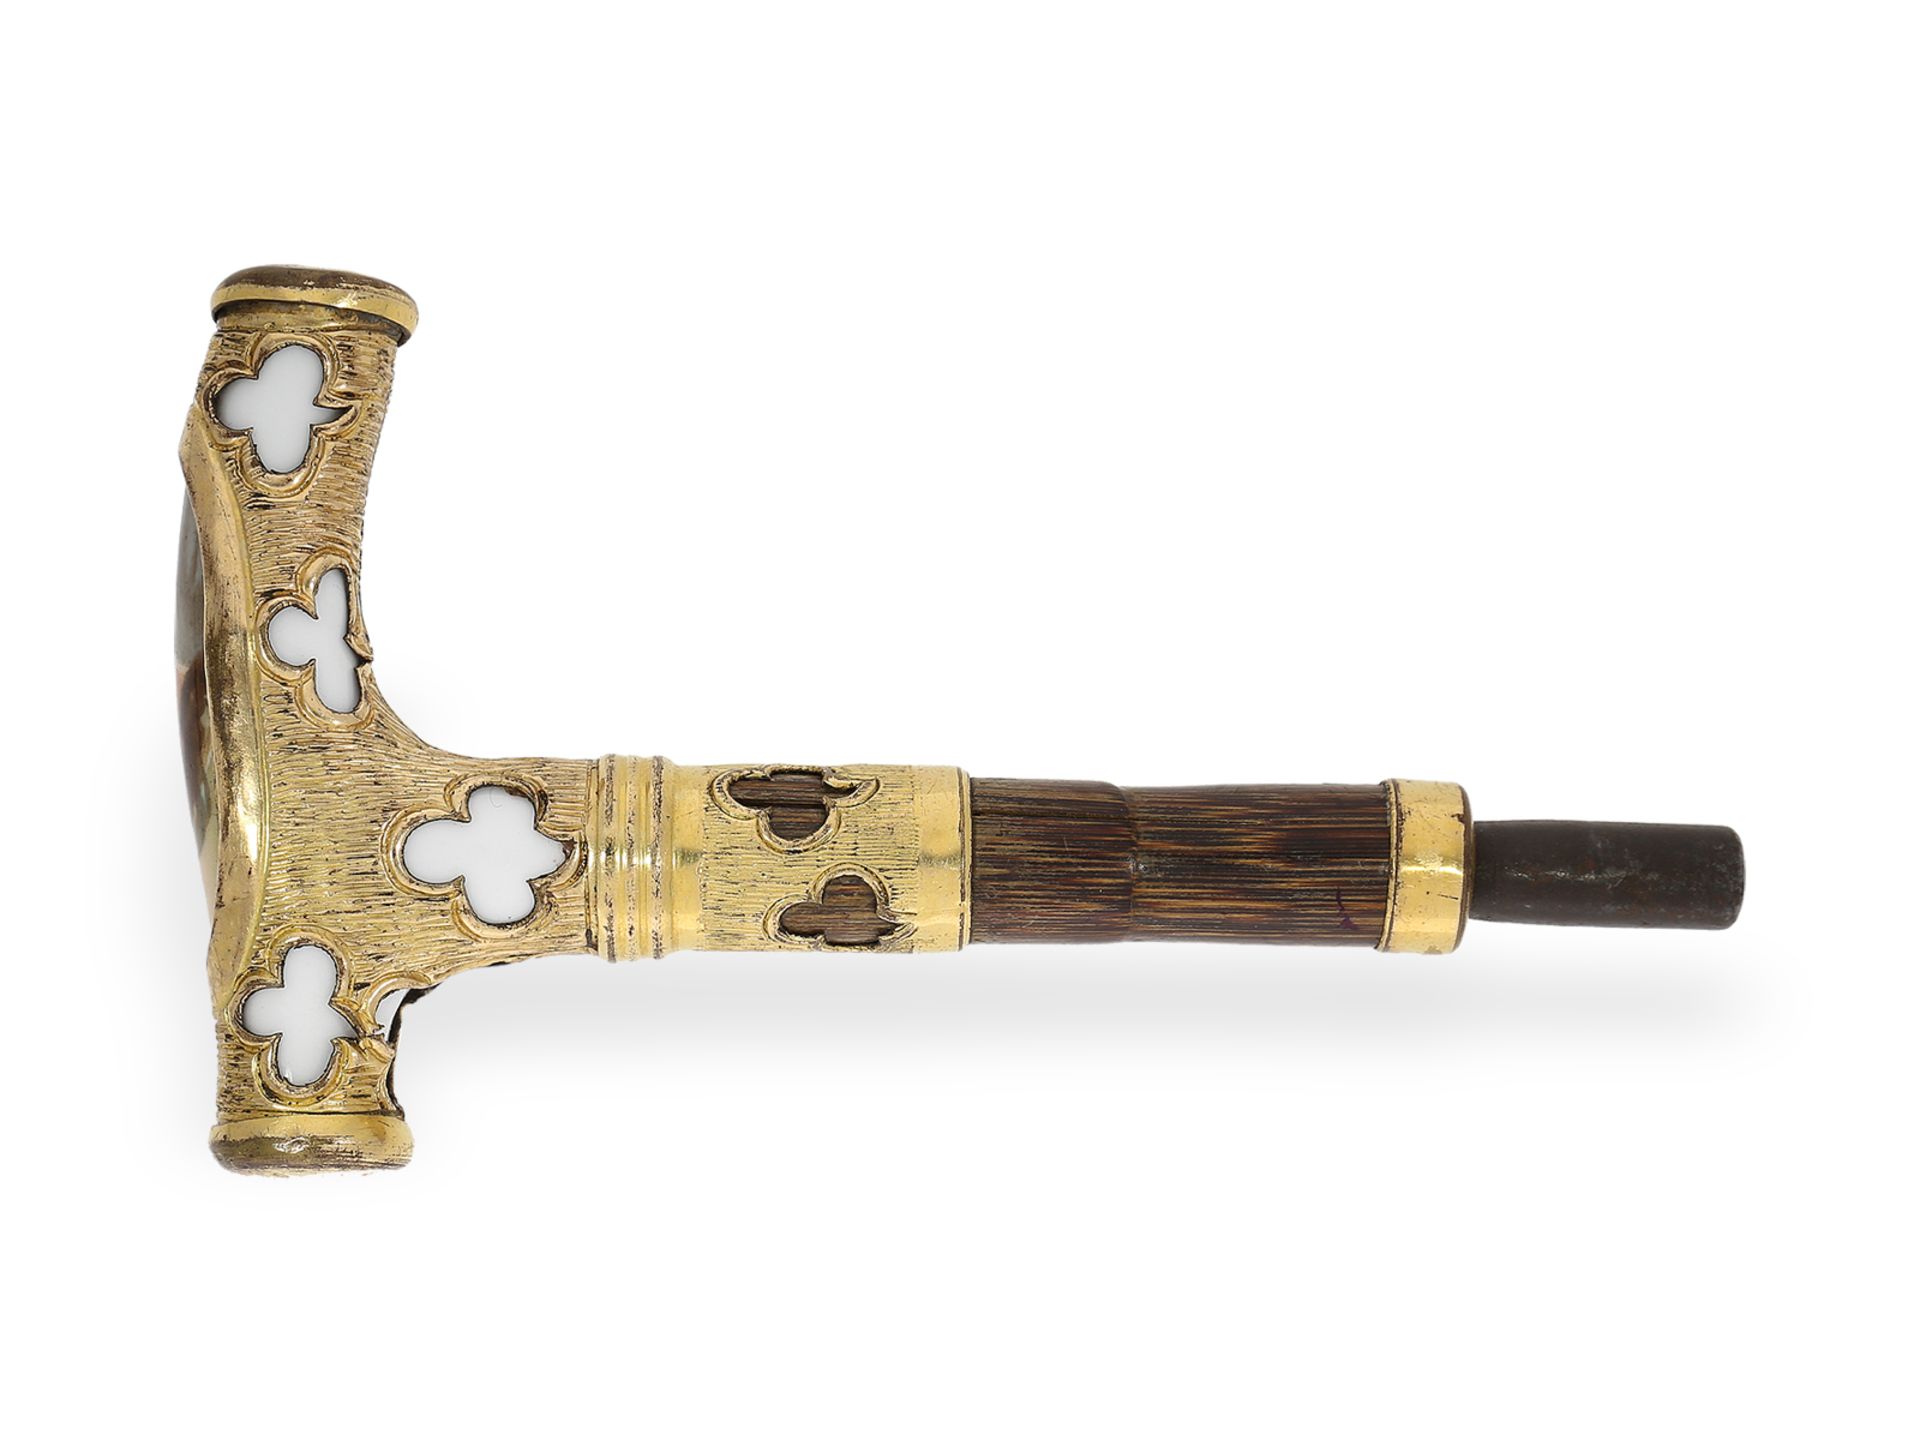 Knob/clock key: walking stick knob with clock key and porcelain painting, 19th century - Image 2 of 3